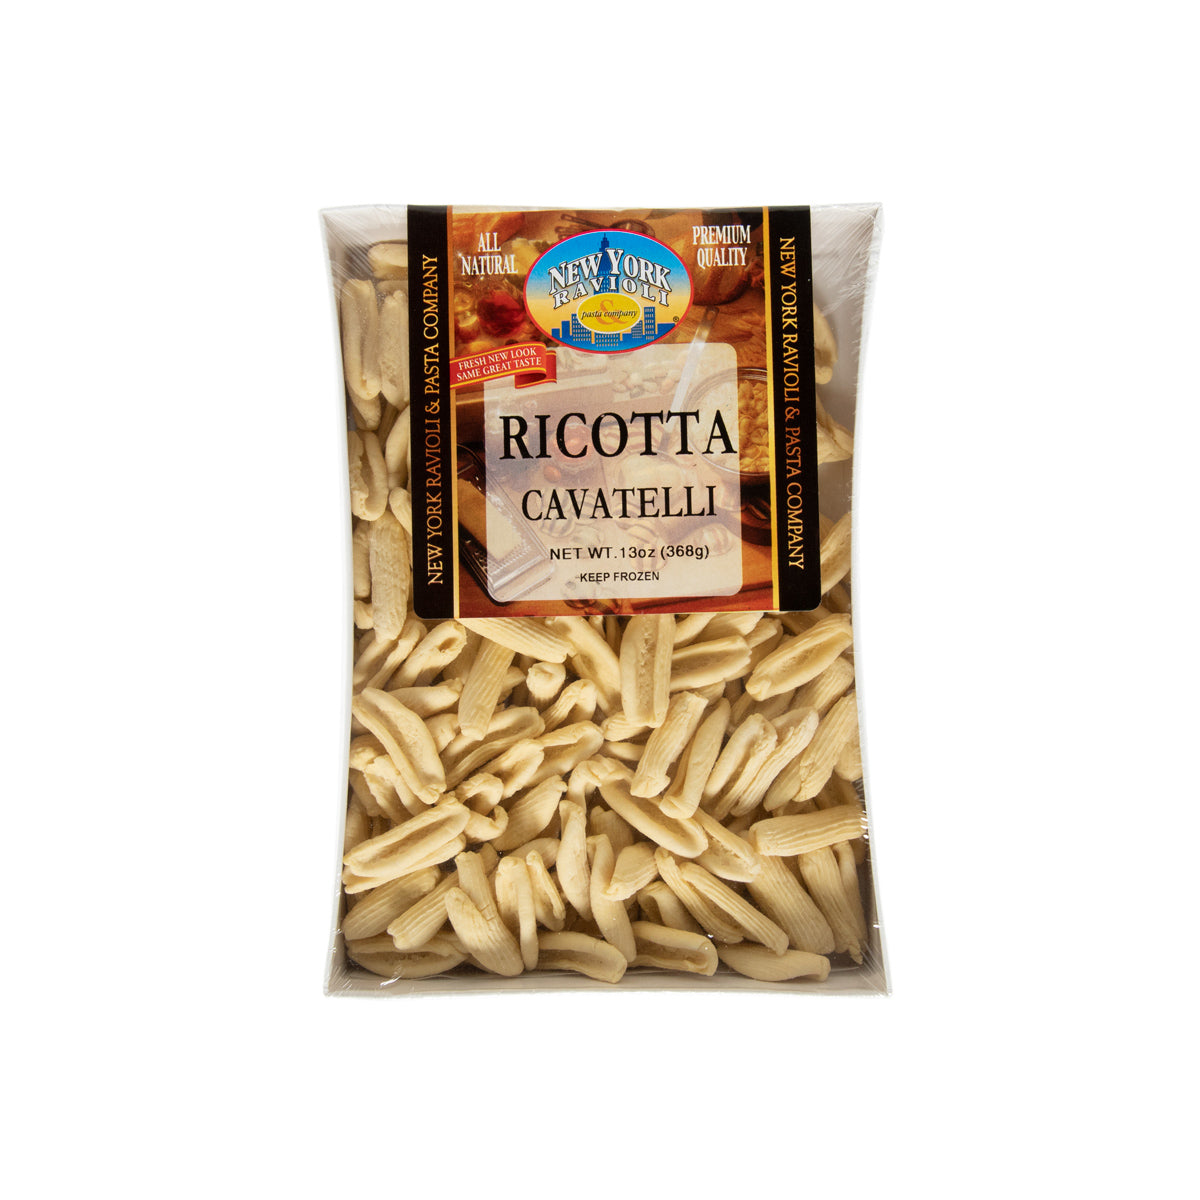 New York Ravioli And Pasta Company Ricotta Cavatelli 5 LB